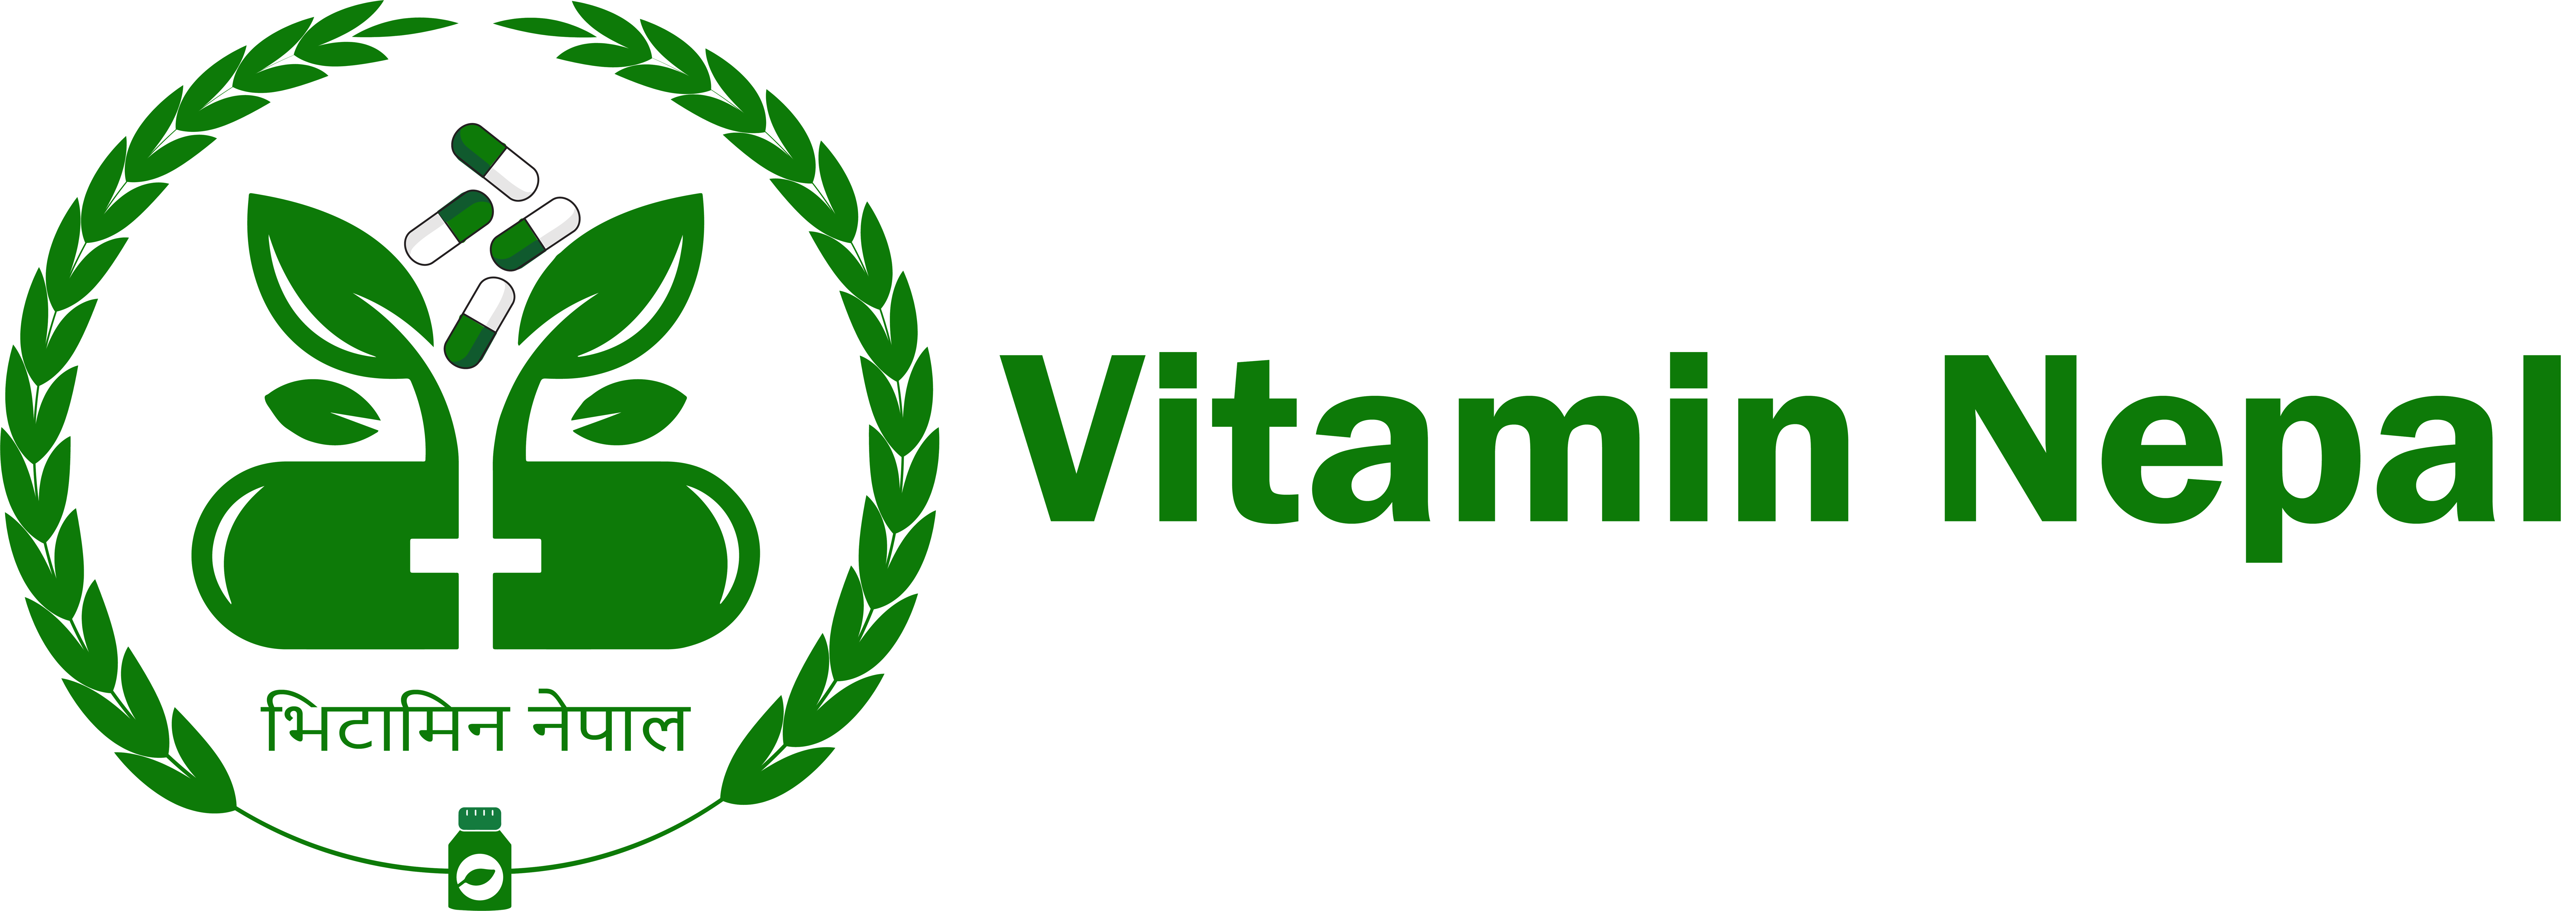 Vitamin Nepal Logo